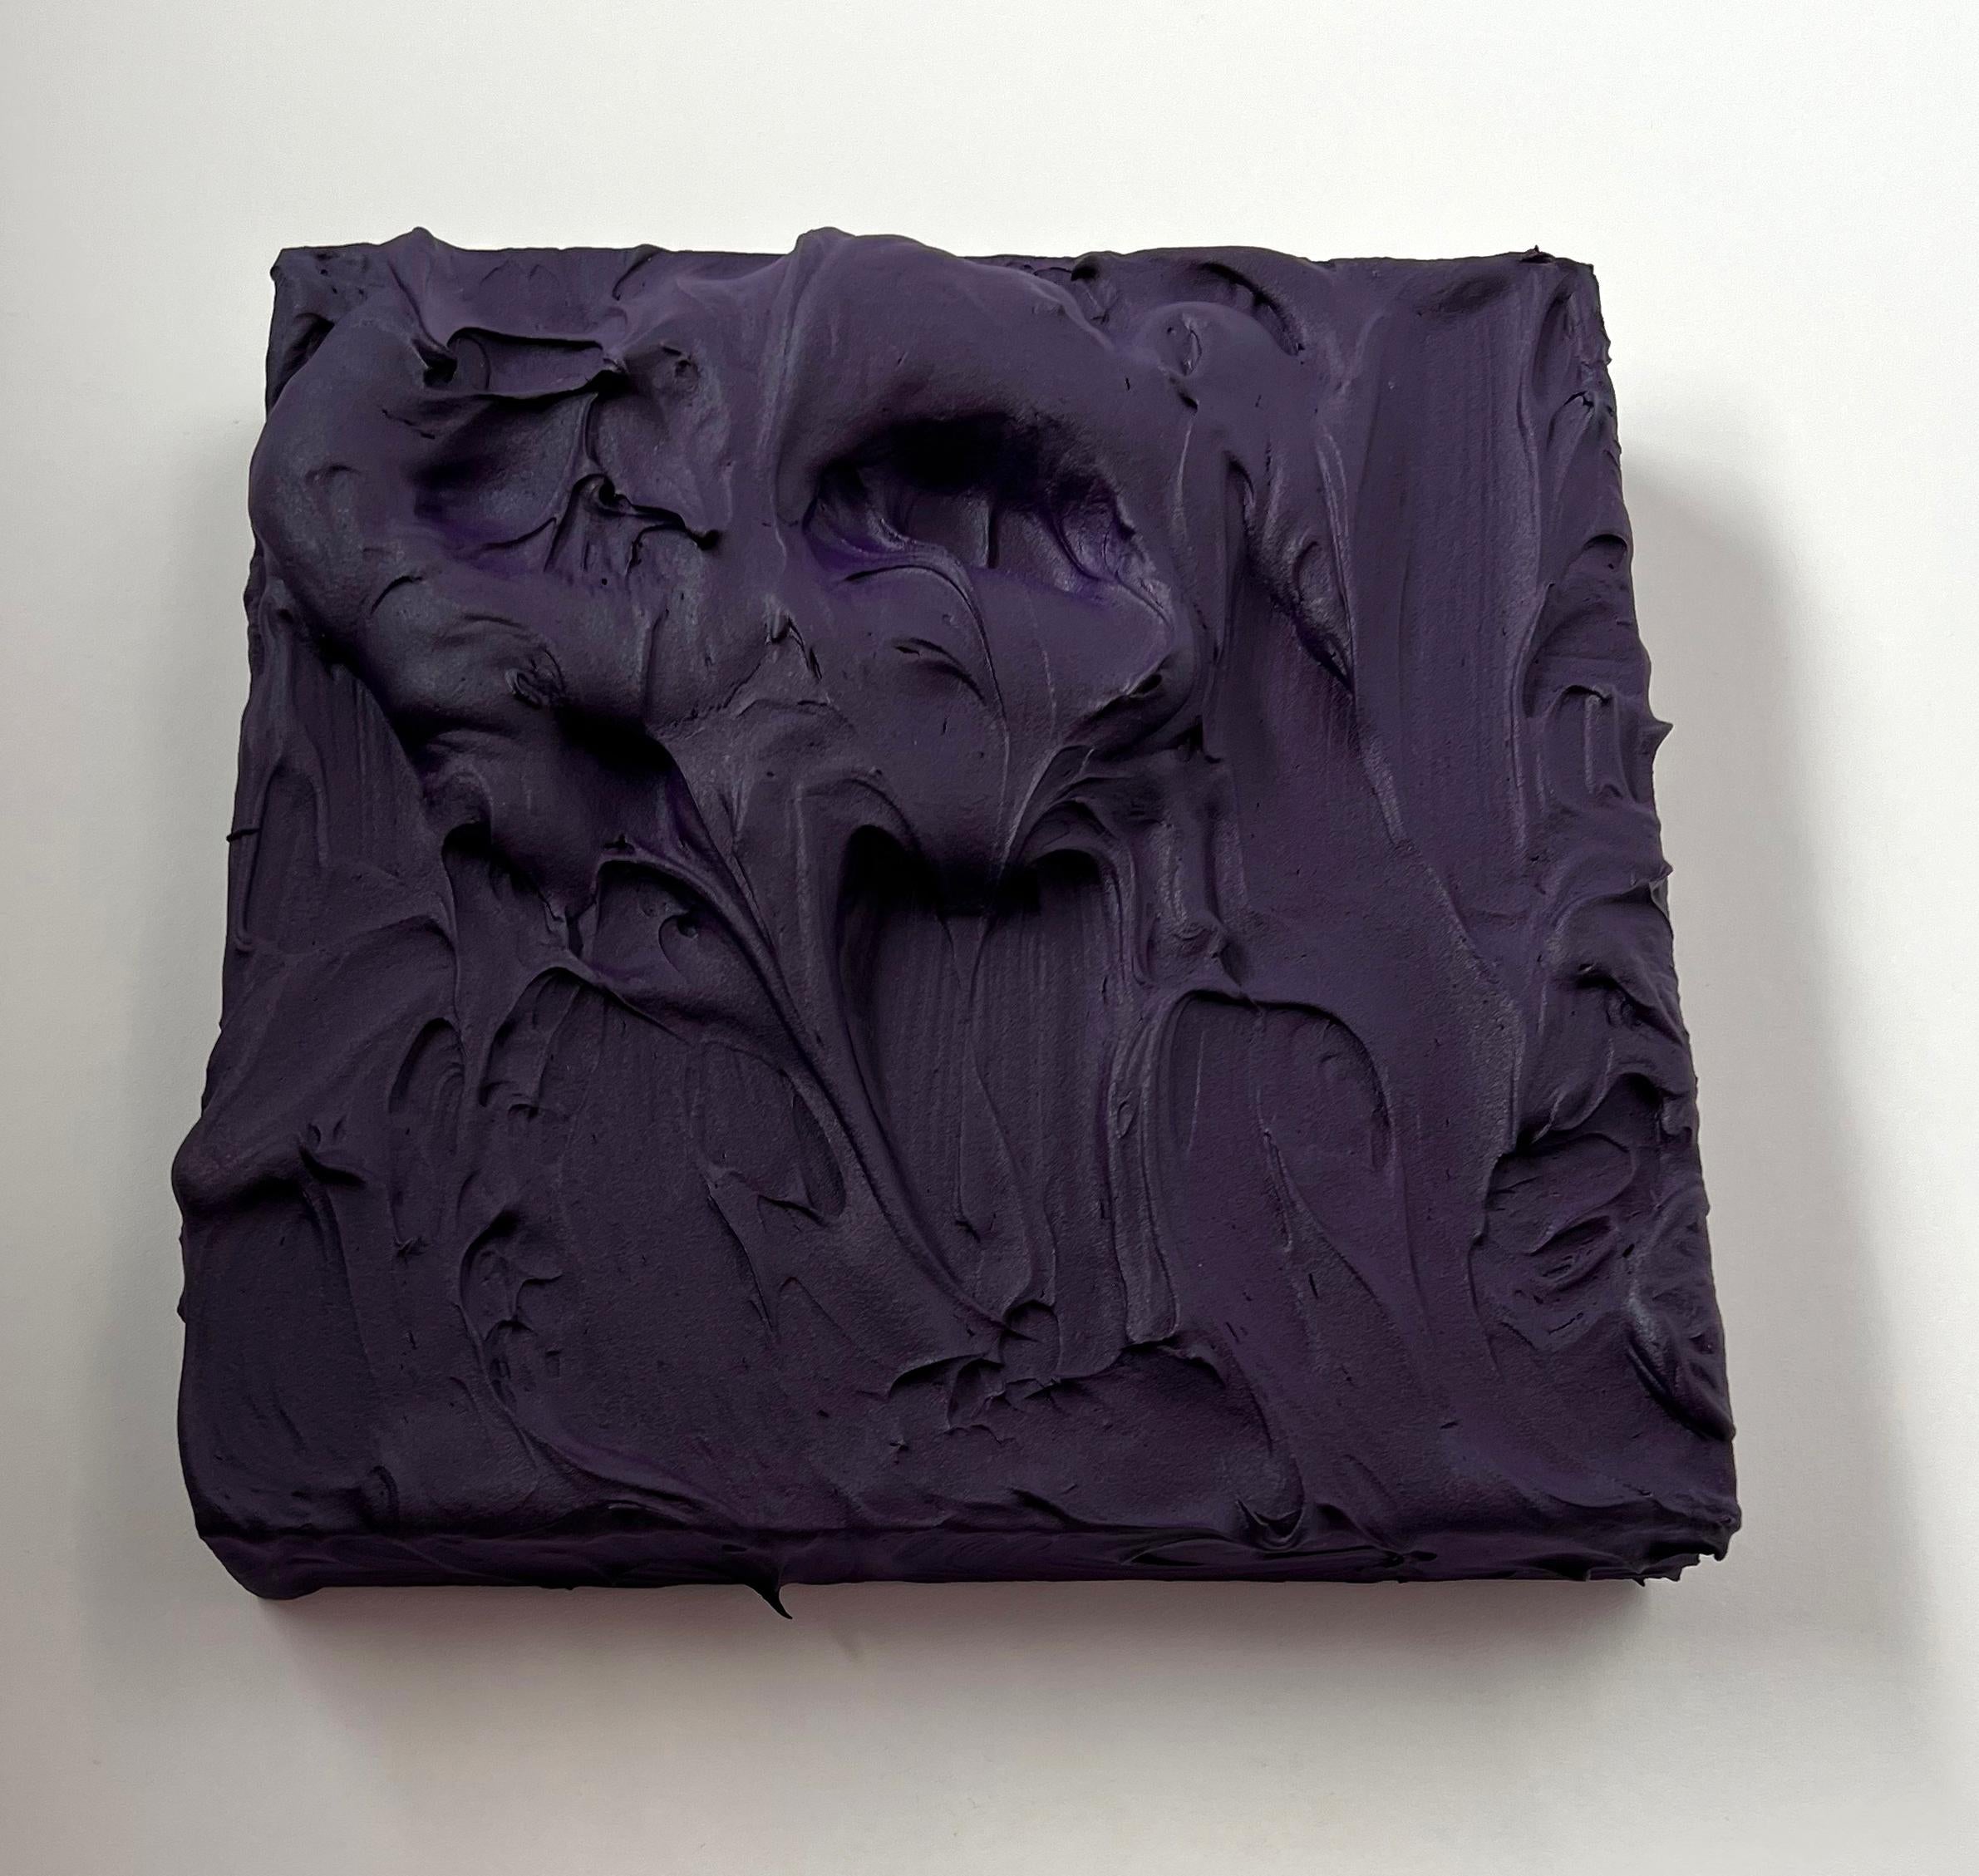 Royal Purple Excess (thick impasto painting monochrome pop art square design) - Pop Art Painting by Chloe Hedden